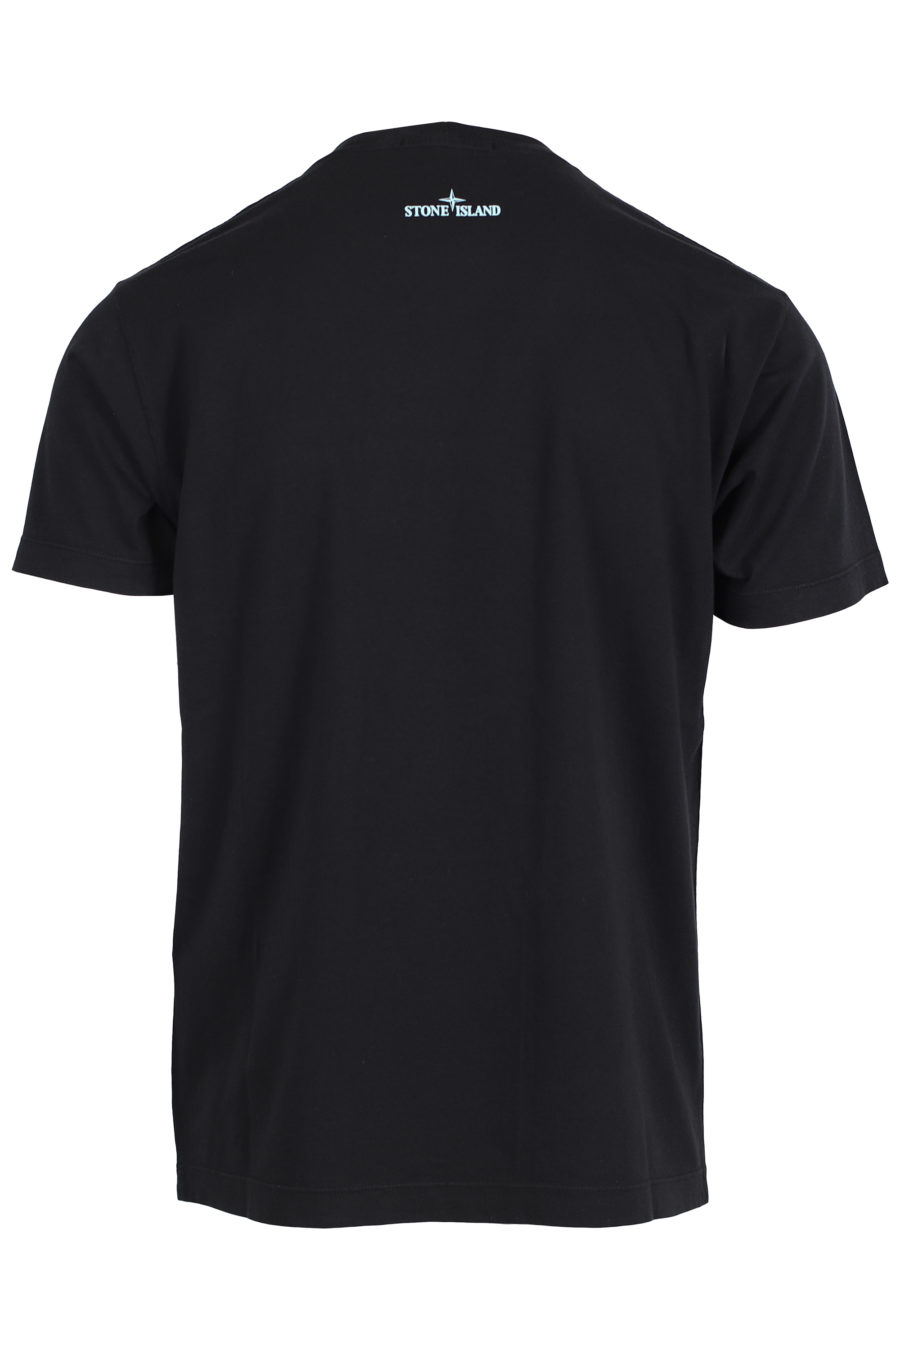 T-shirt noir avec grand logo multicolore - IMG 2510